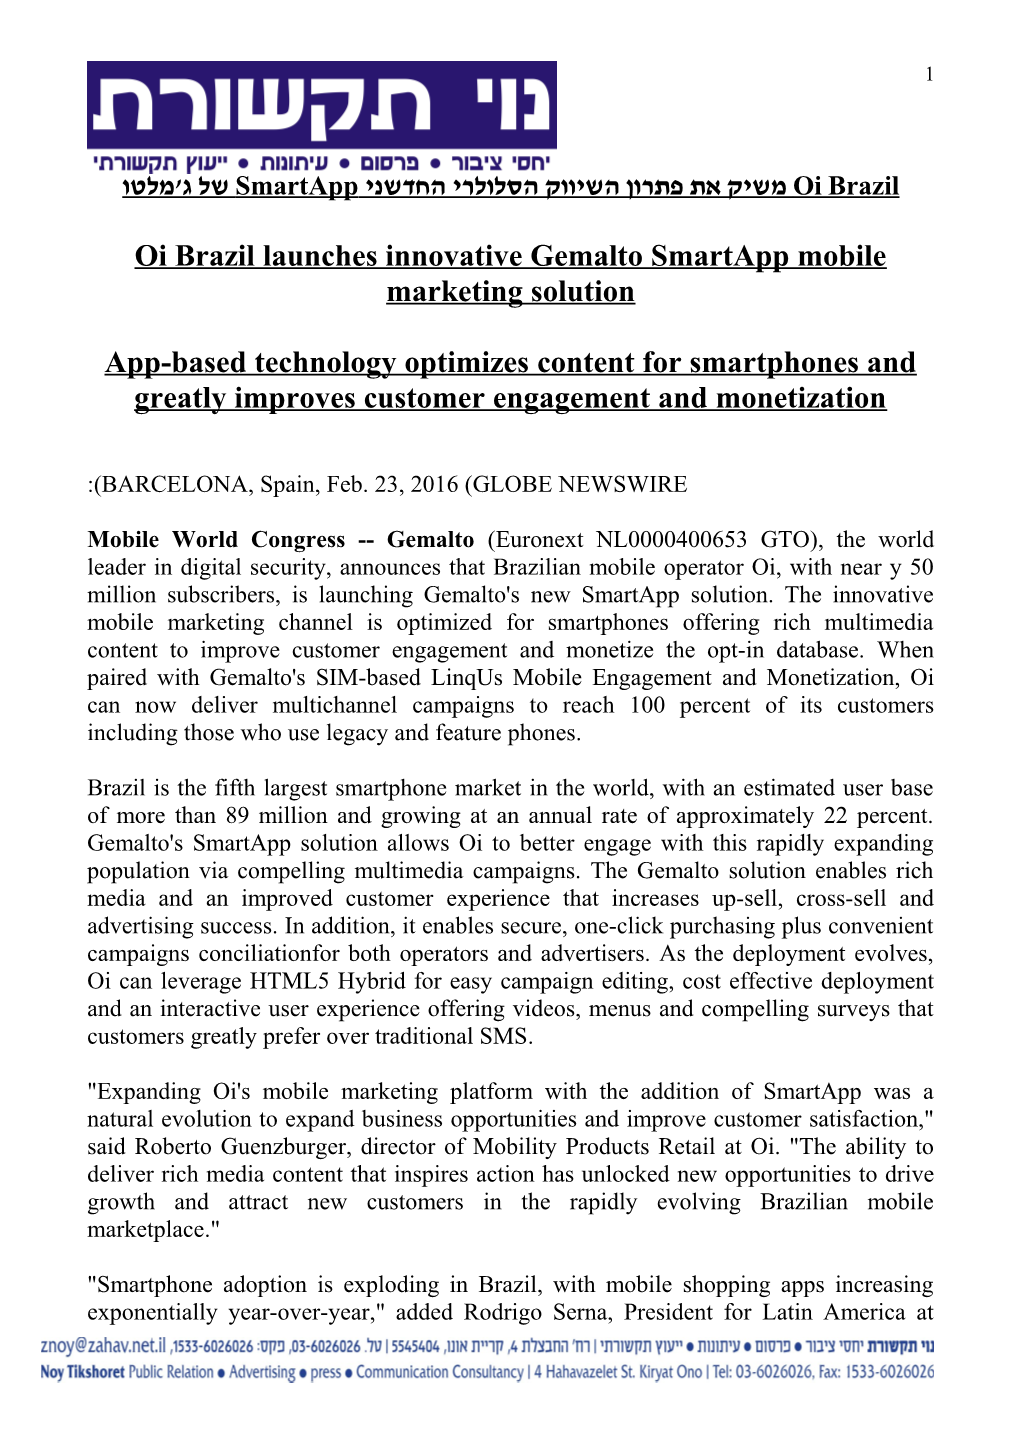 Oi Brazil Launches Innovative Gemalto Smartapp Mobilemarketing Solution